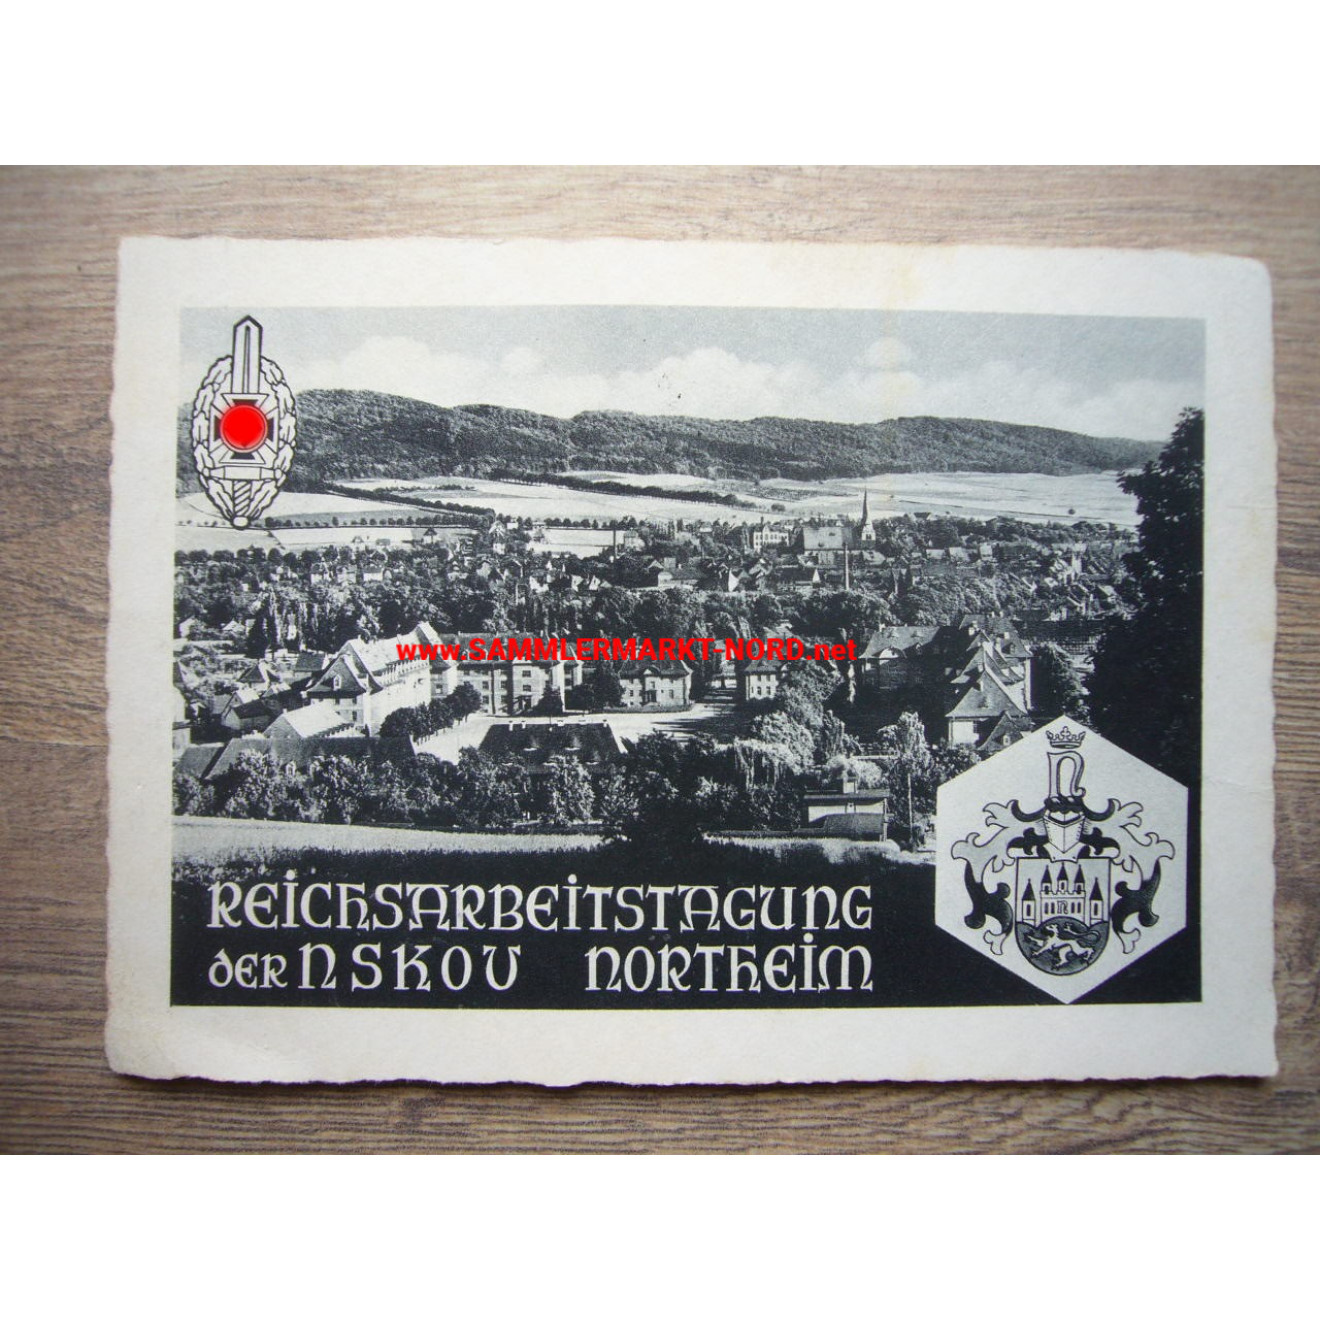 Reich labor conference of the NSKOV in Northeim - postcard